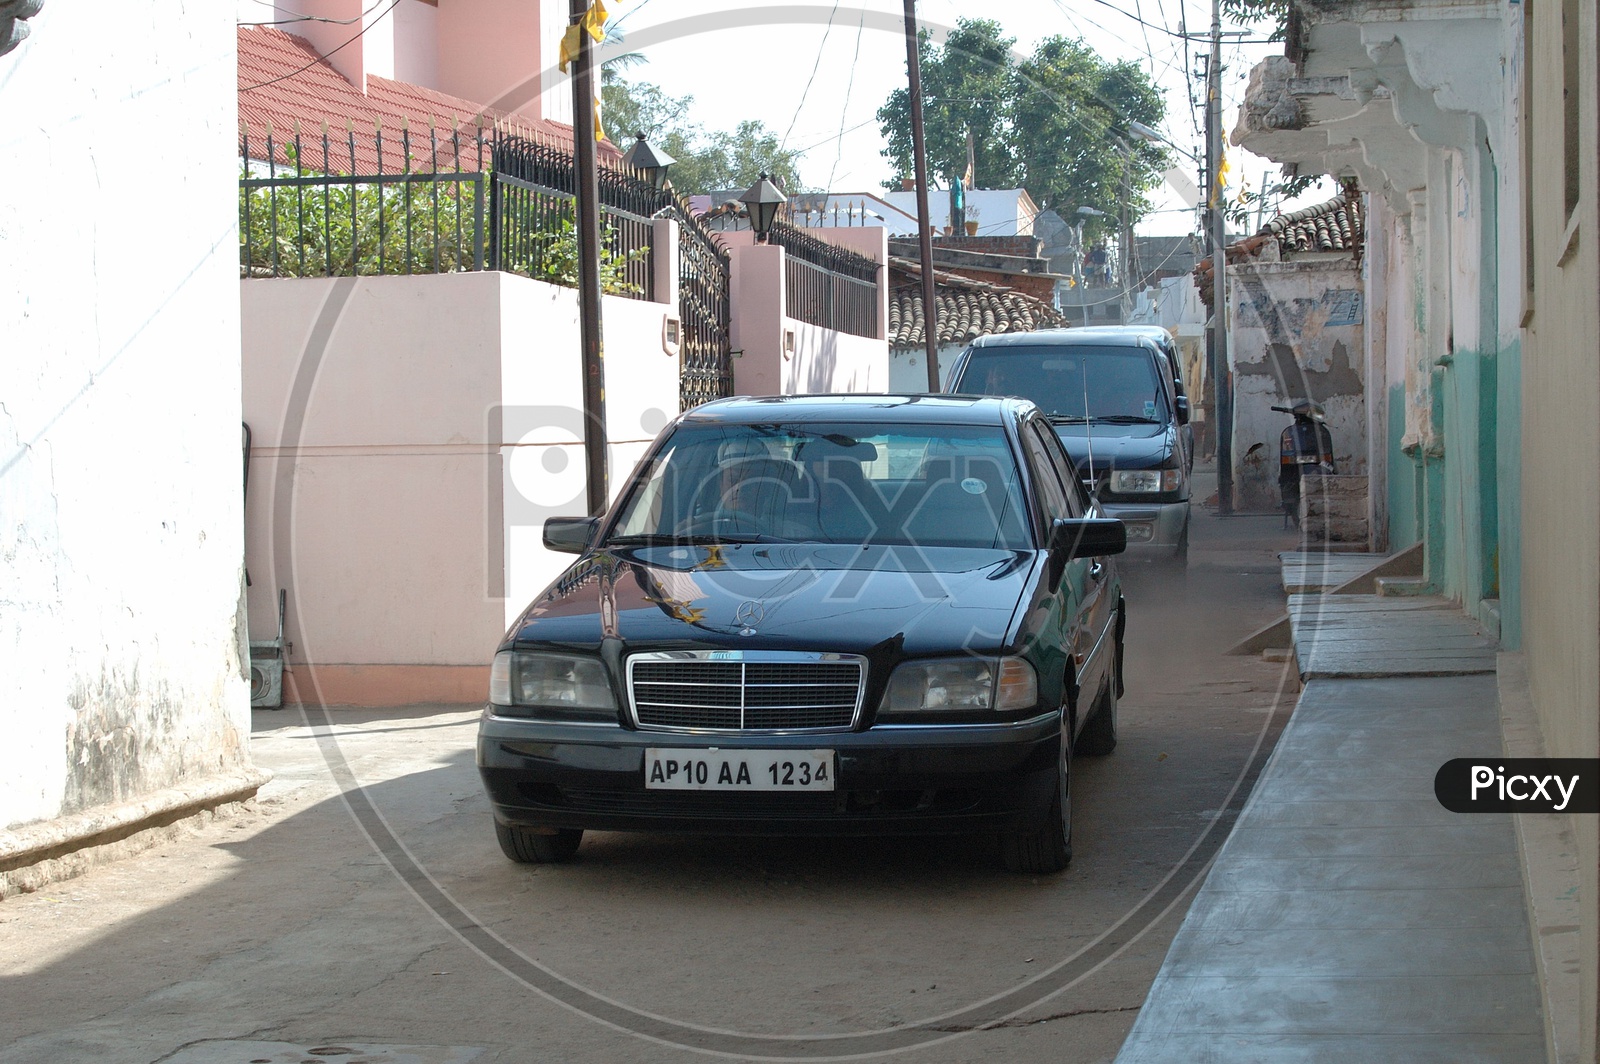 Benz Car In  Rural Village Streets